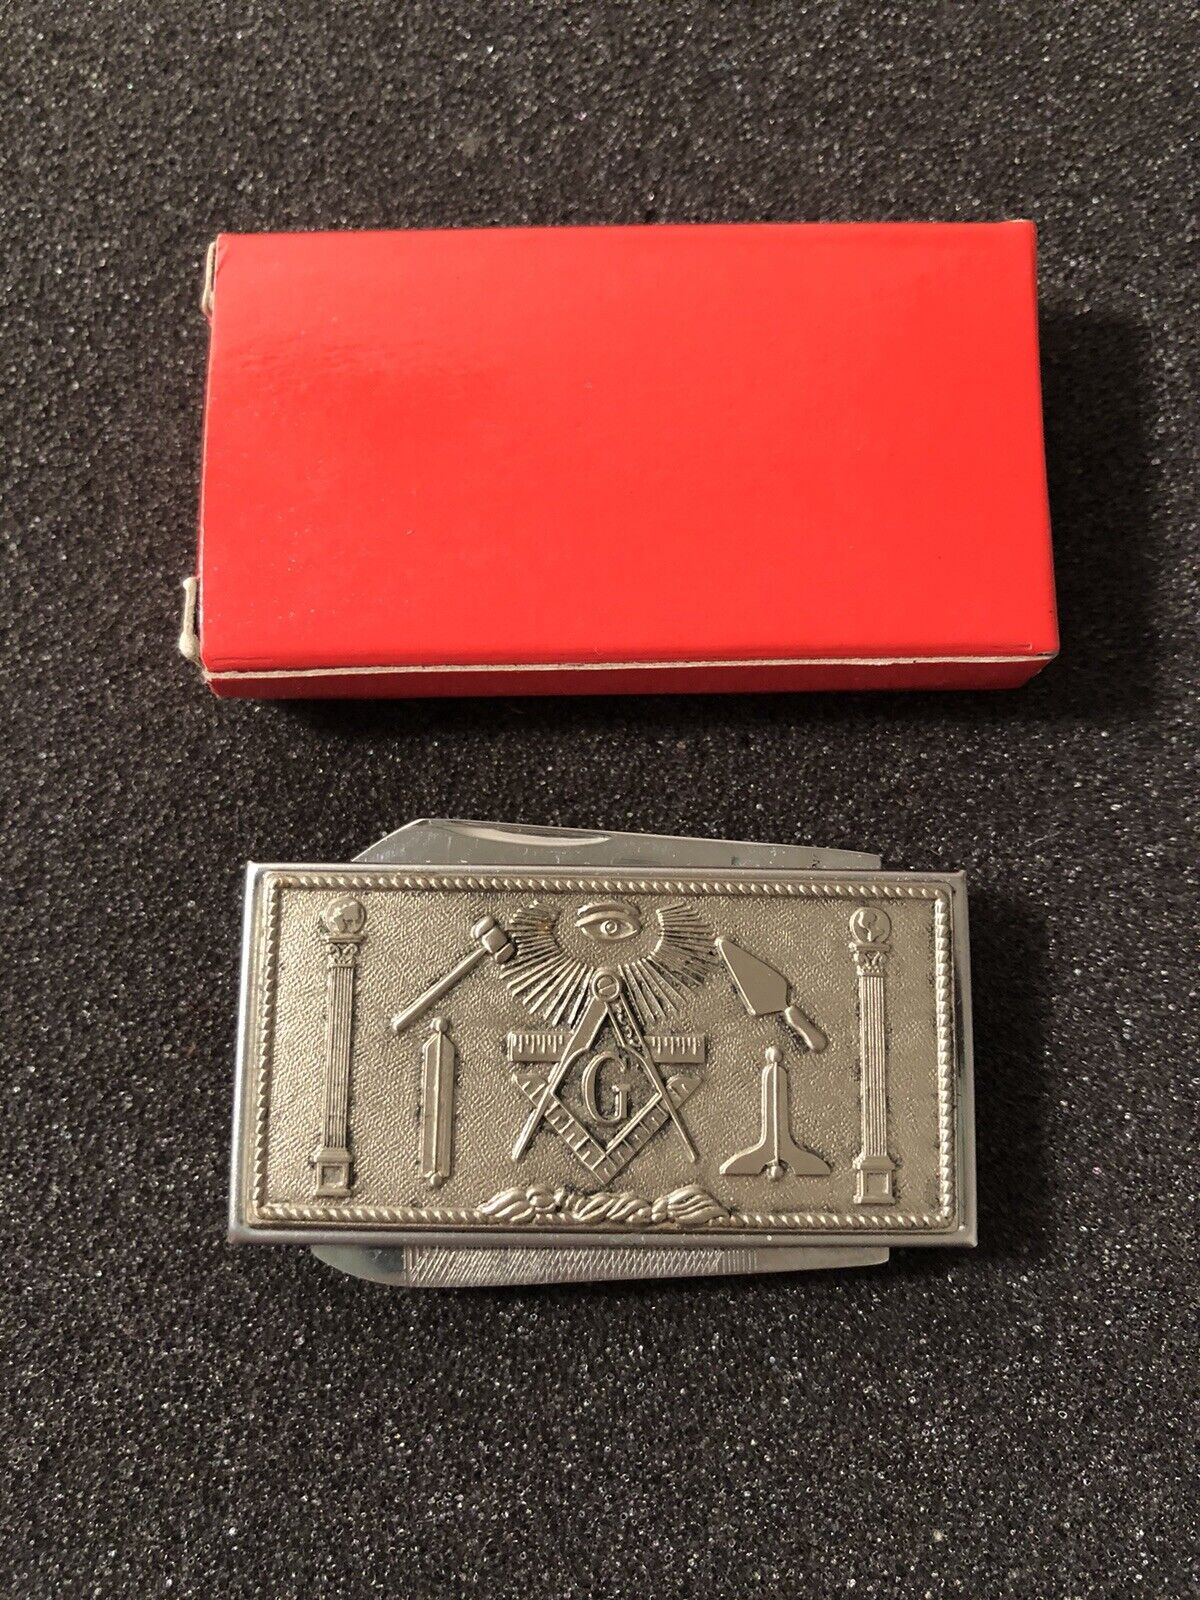 Vintage Freemason Masonic Combination Pocket Knife Money Clip With Red Box